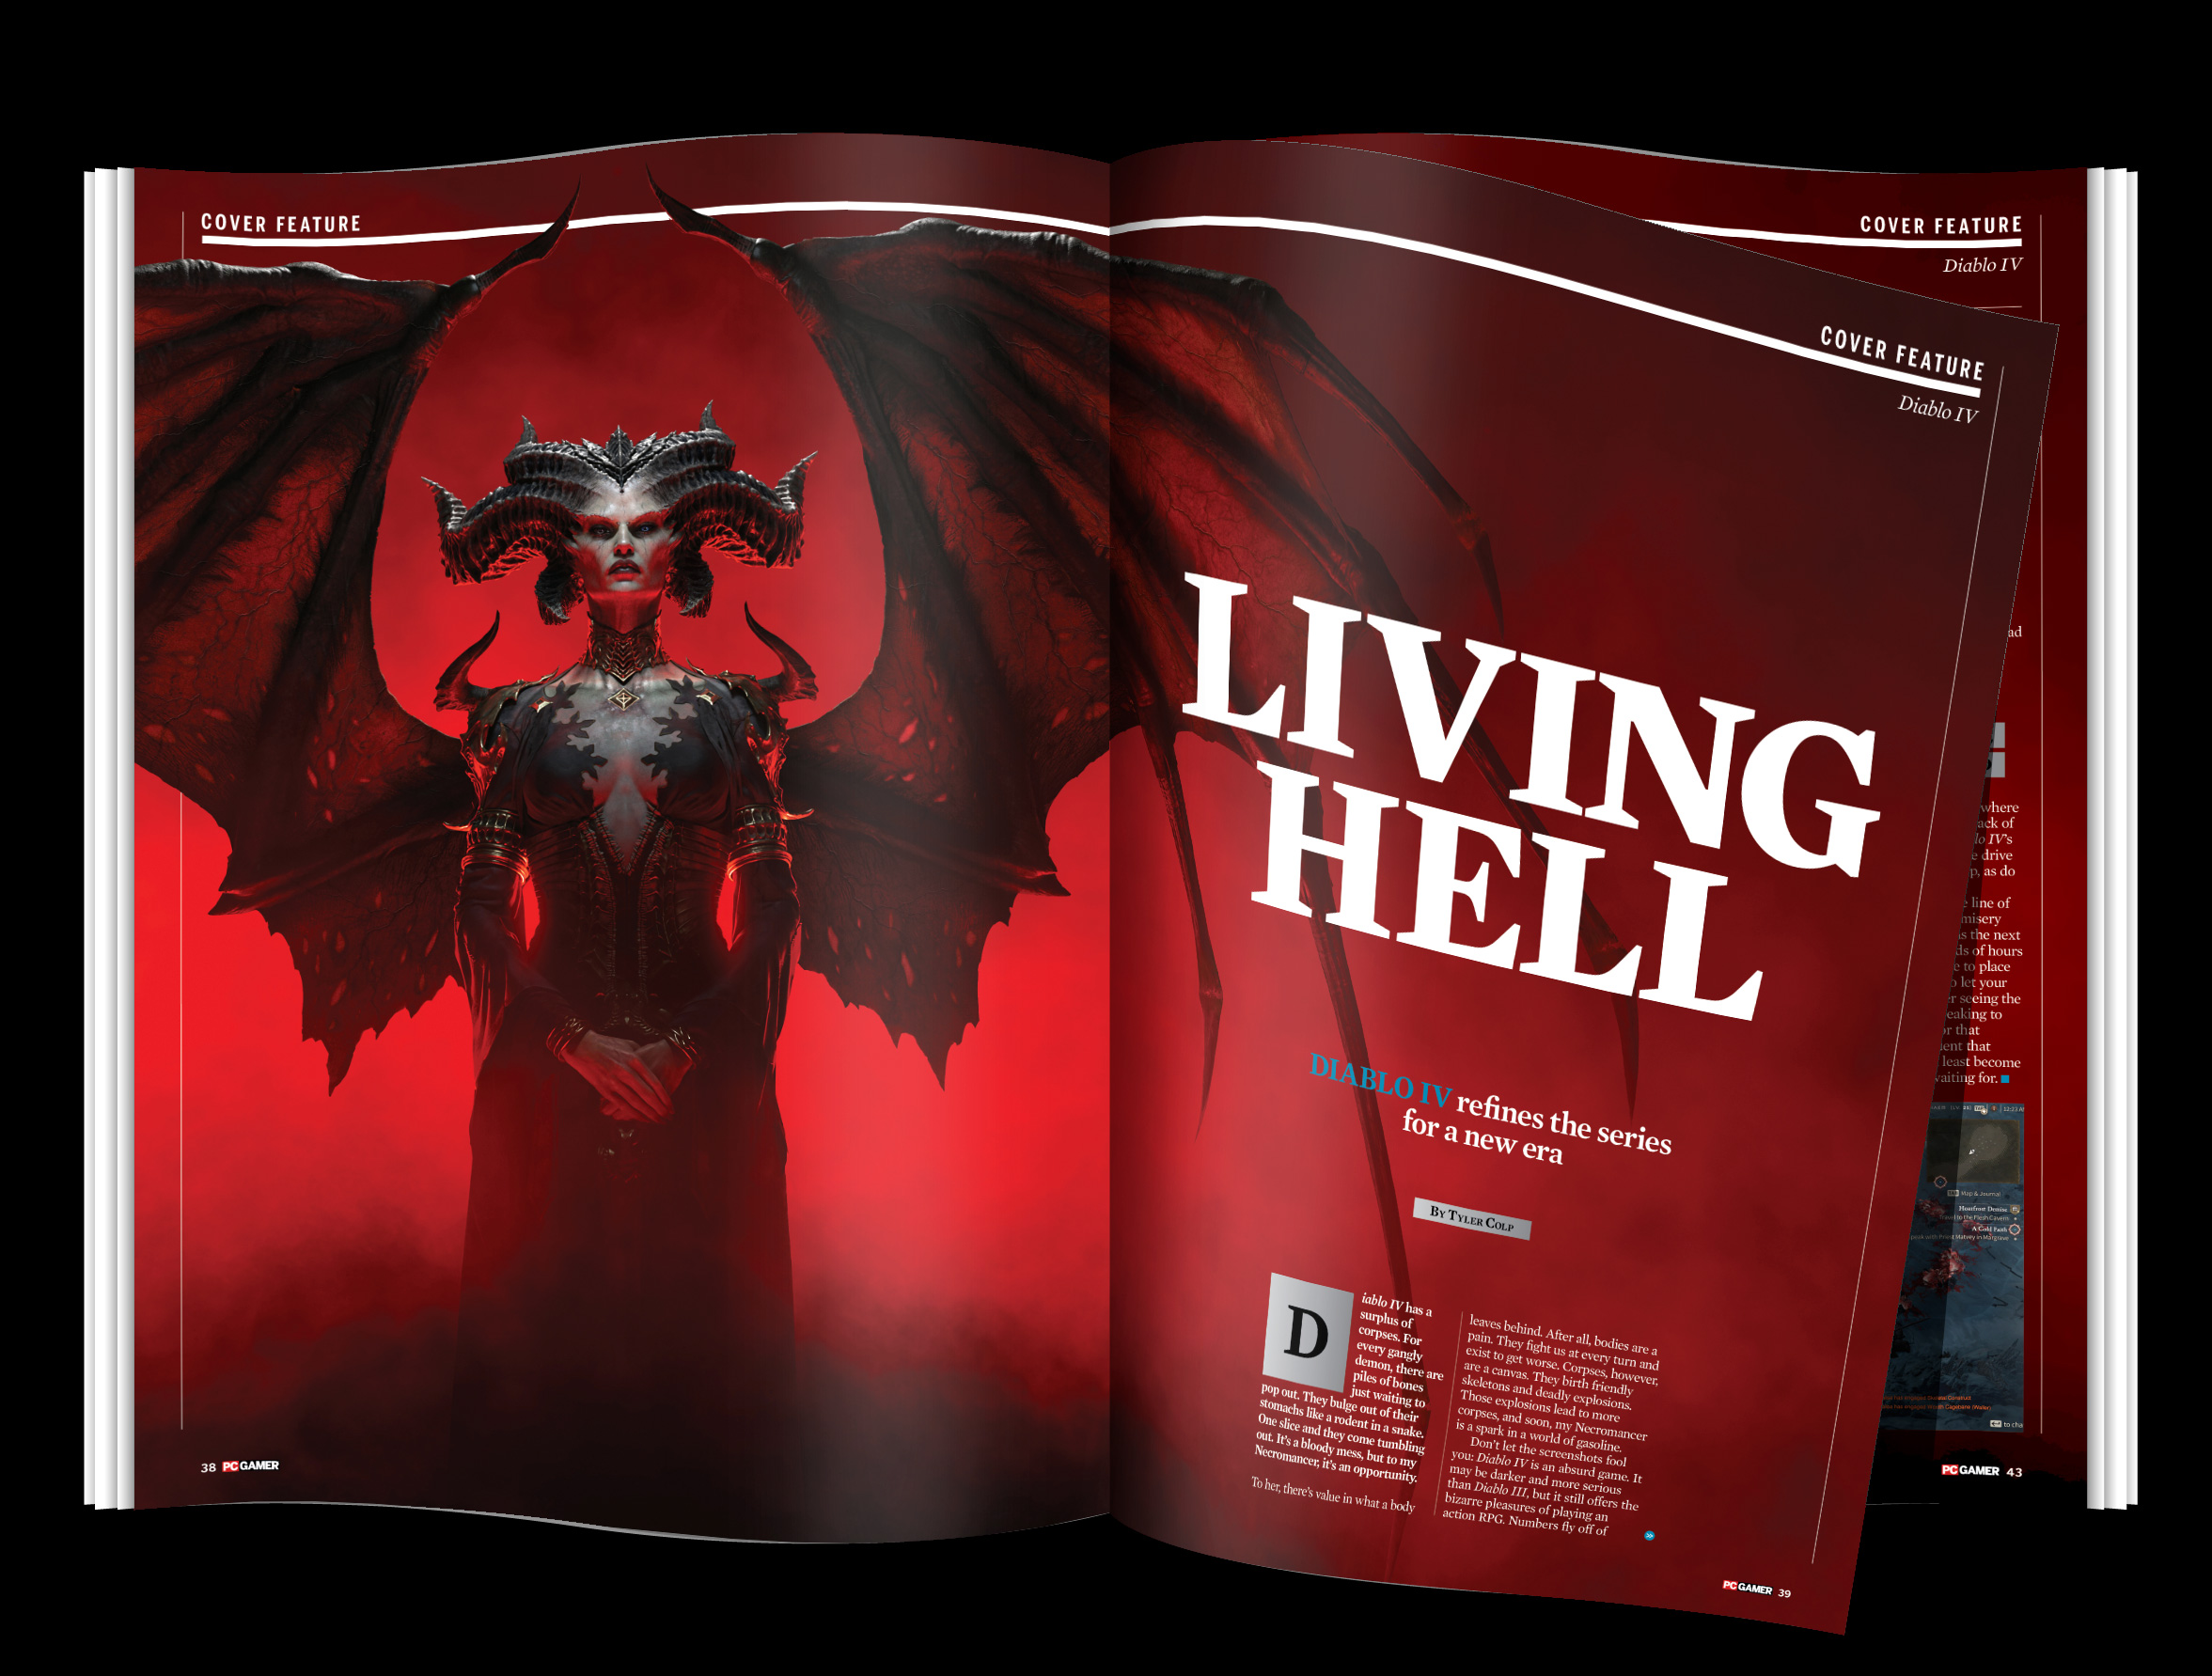 Magazine PC Gamer Diablo 4 juin 2023